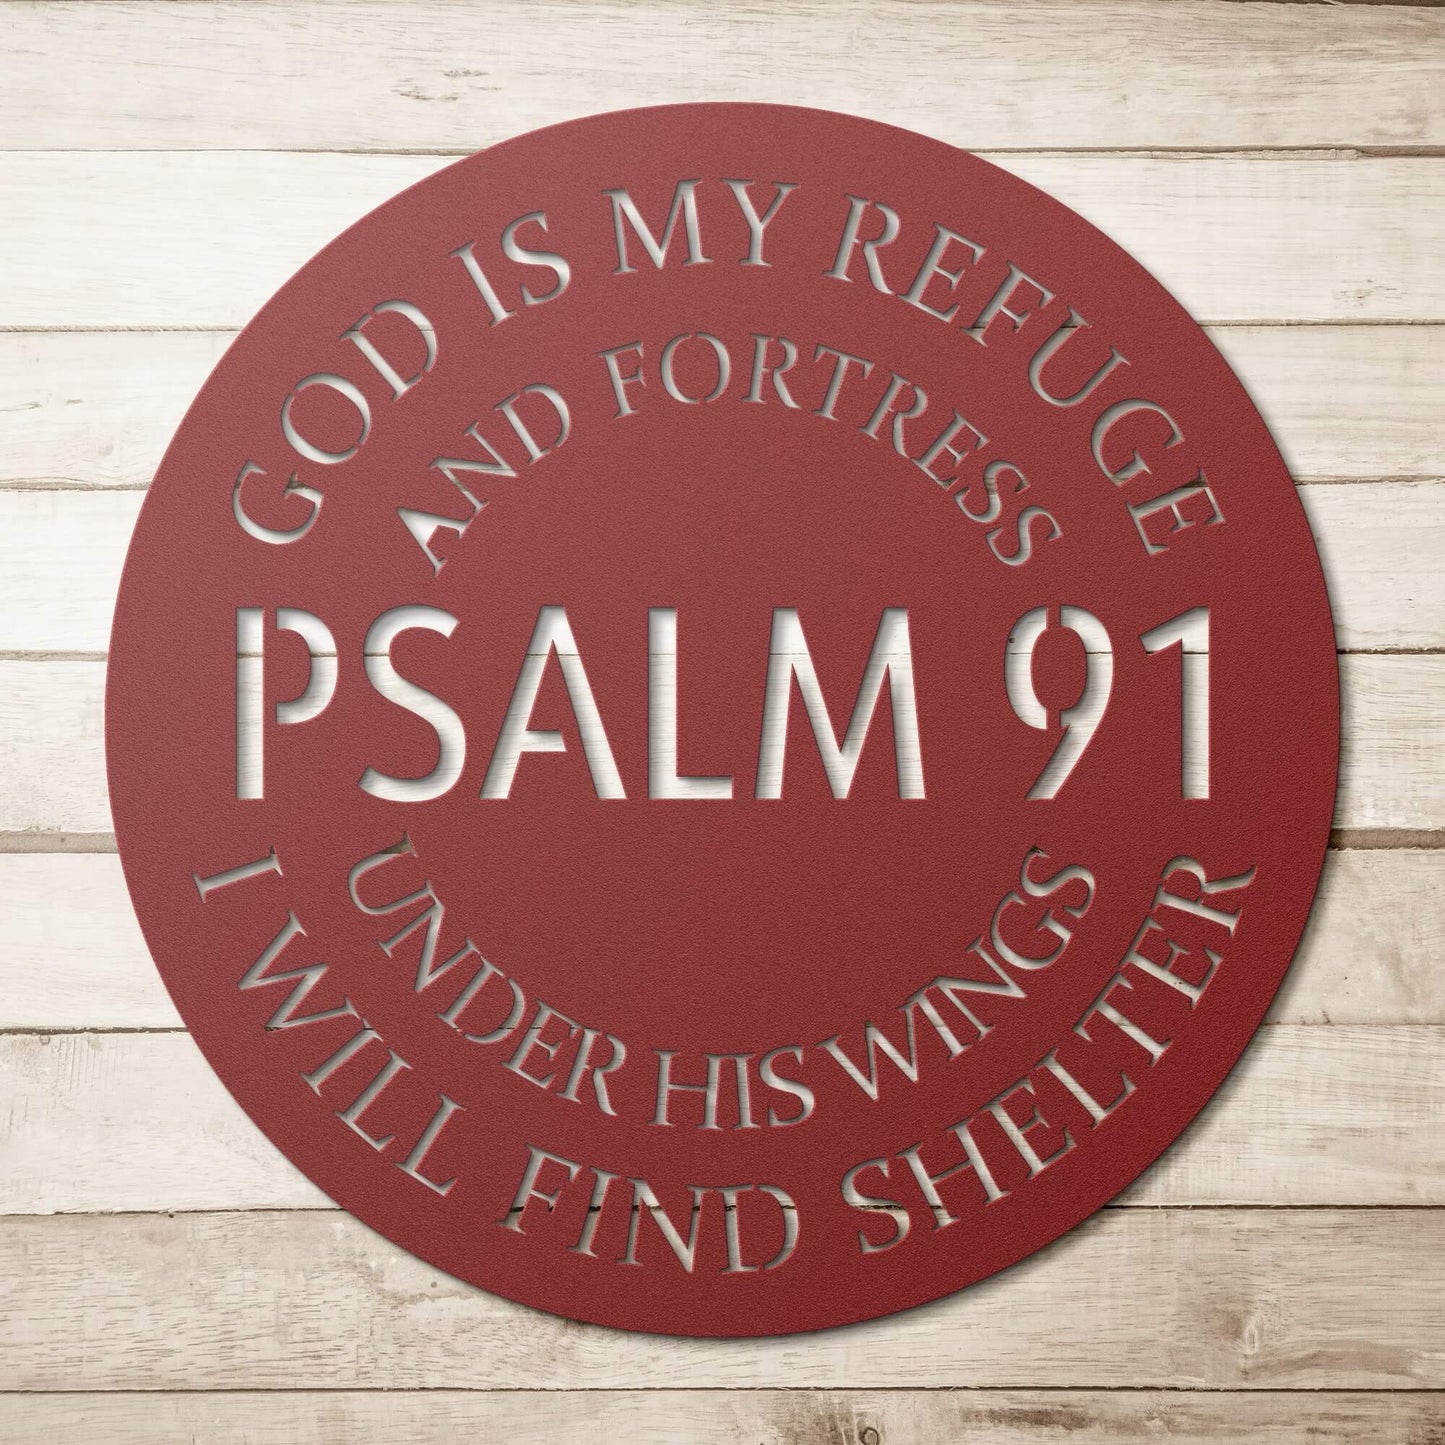 Psalm 91 Metal Sign - Christian Metal Wall Art - Religious Metal Wall Decor